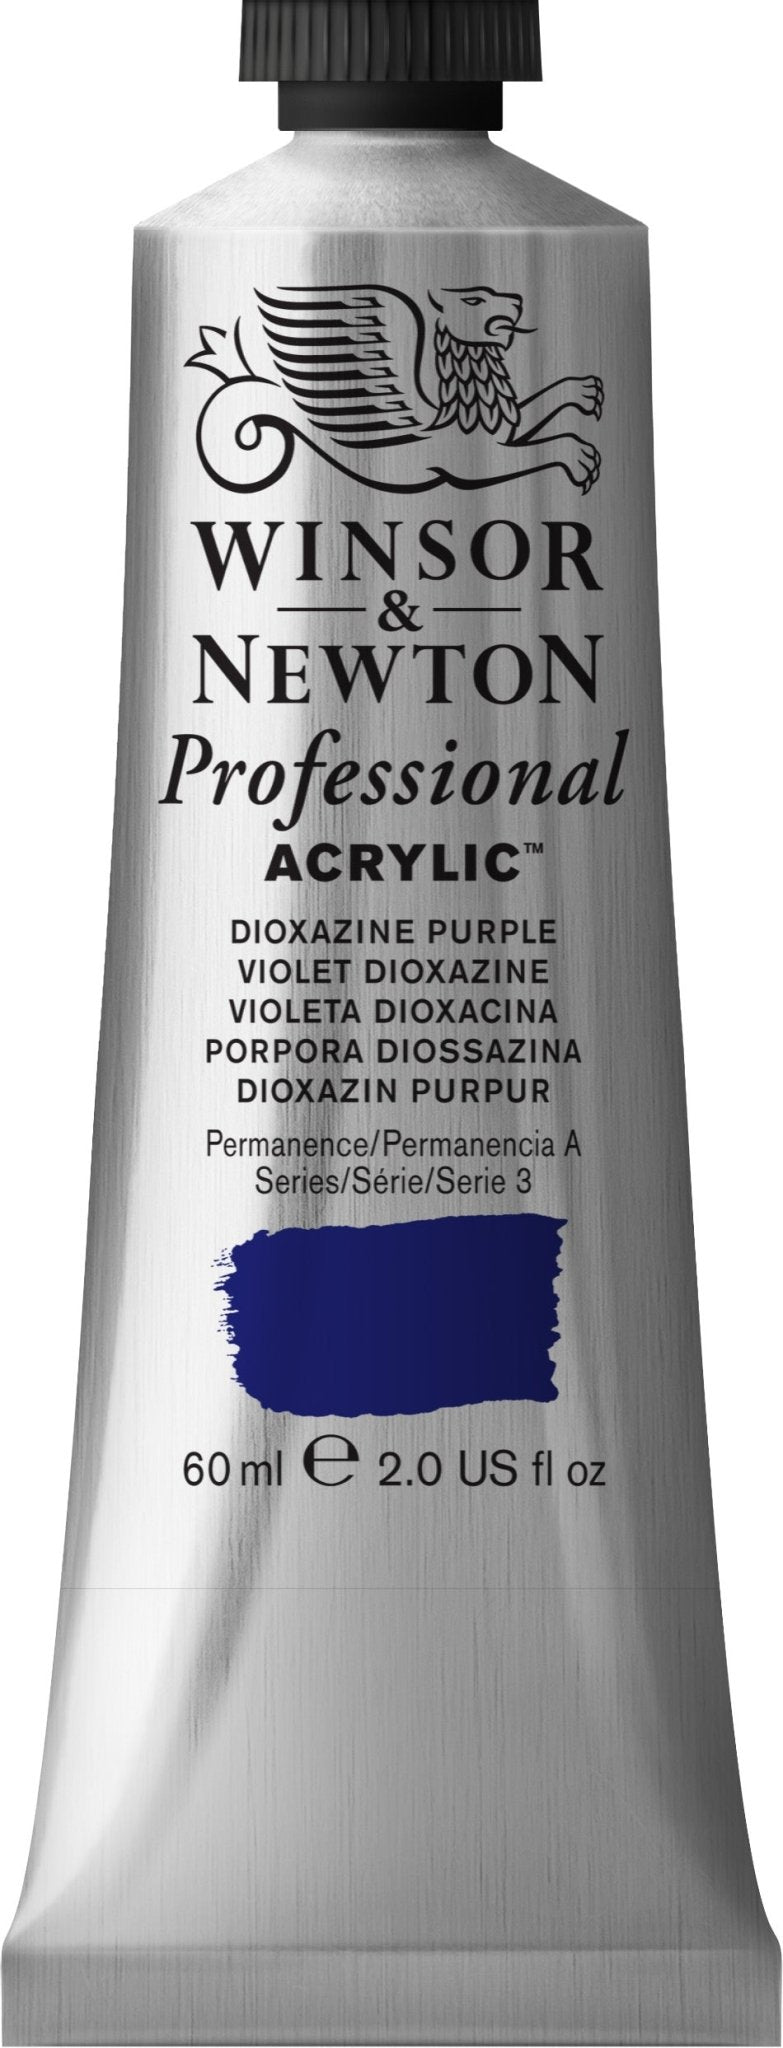 W & N Professional Acrylic 60ml Dioxazine Purple - theartshop.com.au